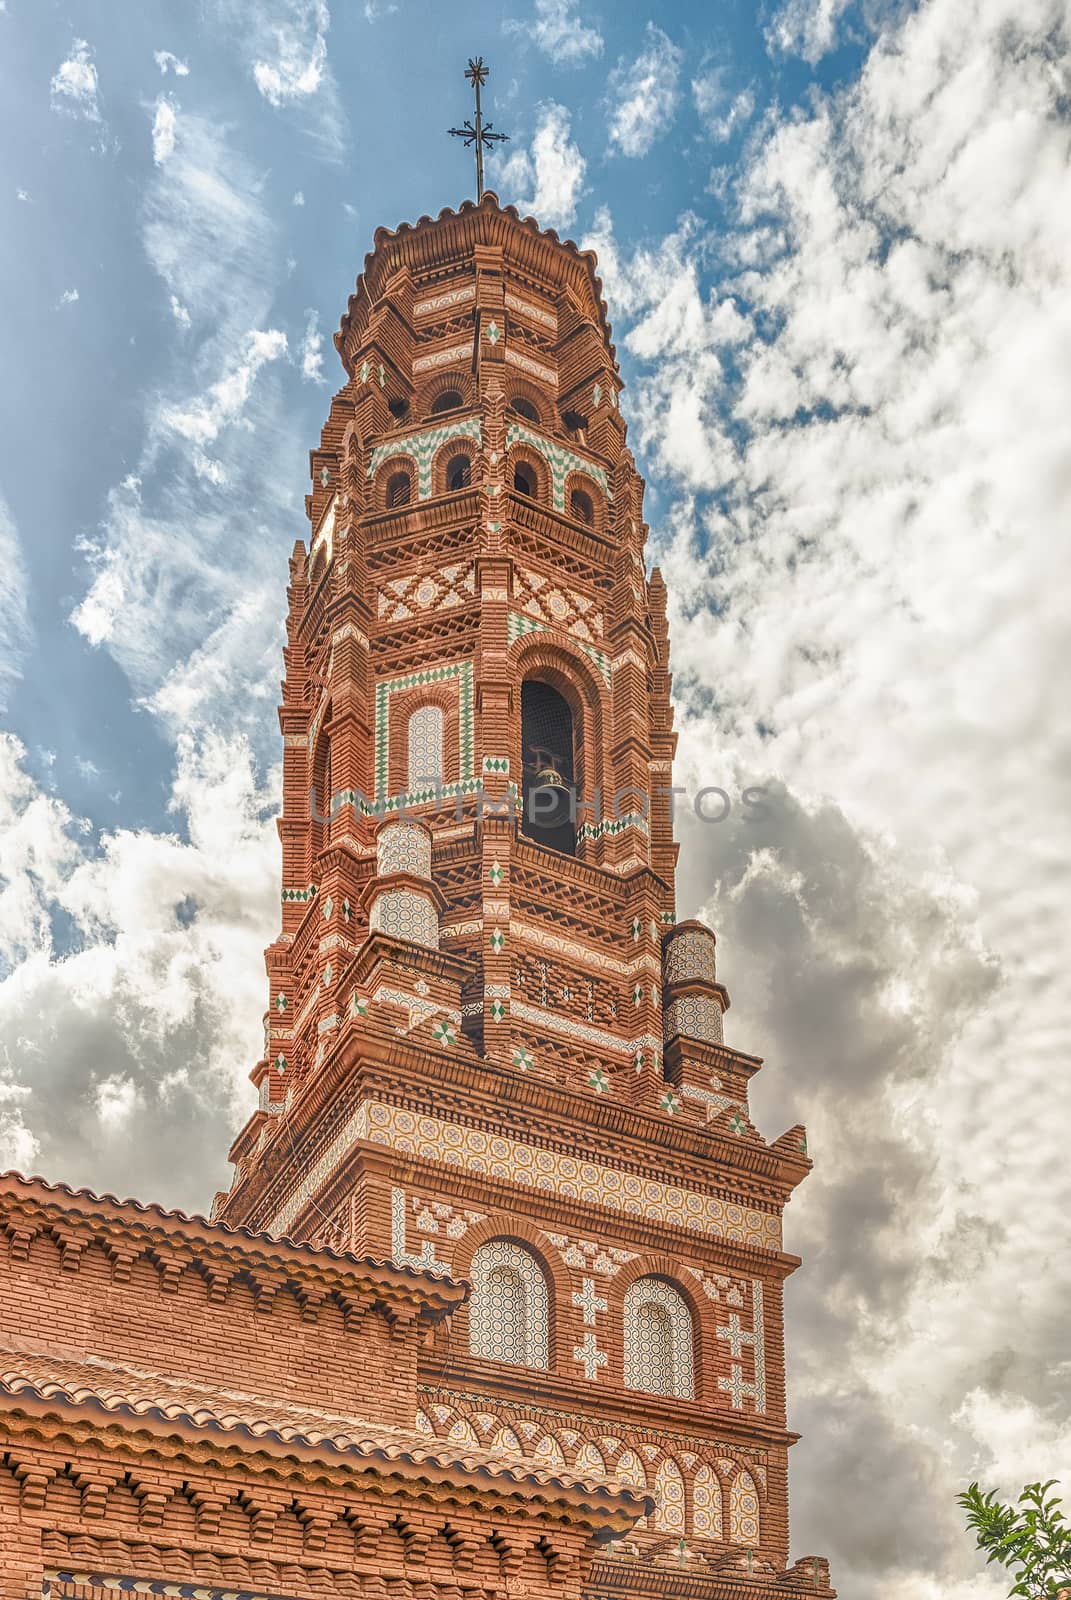 Scenic bell tower in Poble Espanyol, Barcelona, Catalonia, Spain by marcorubino